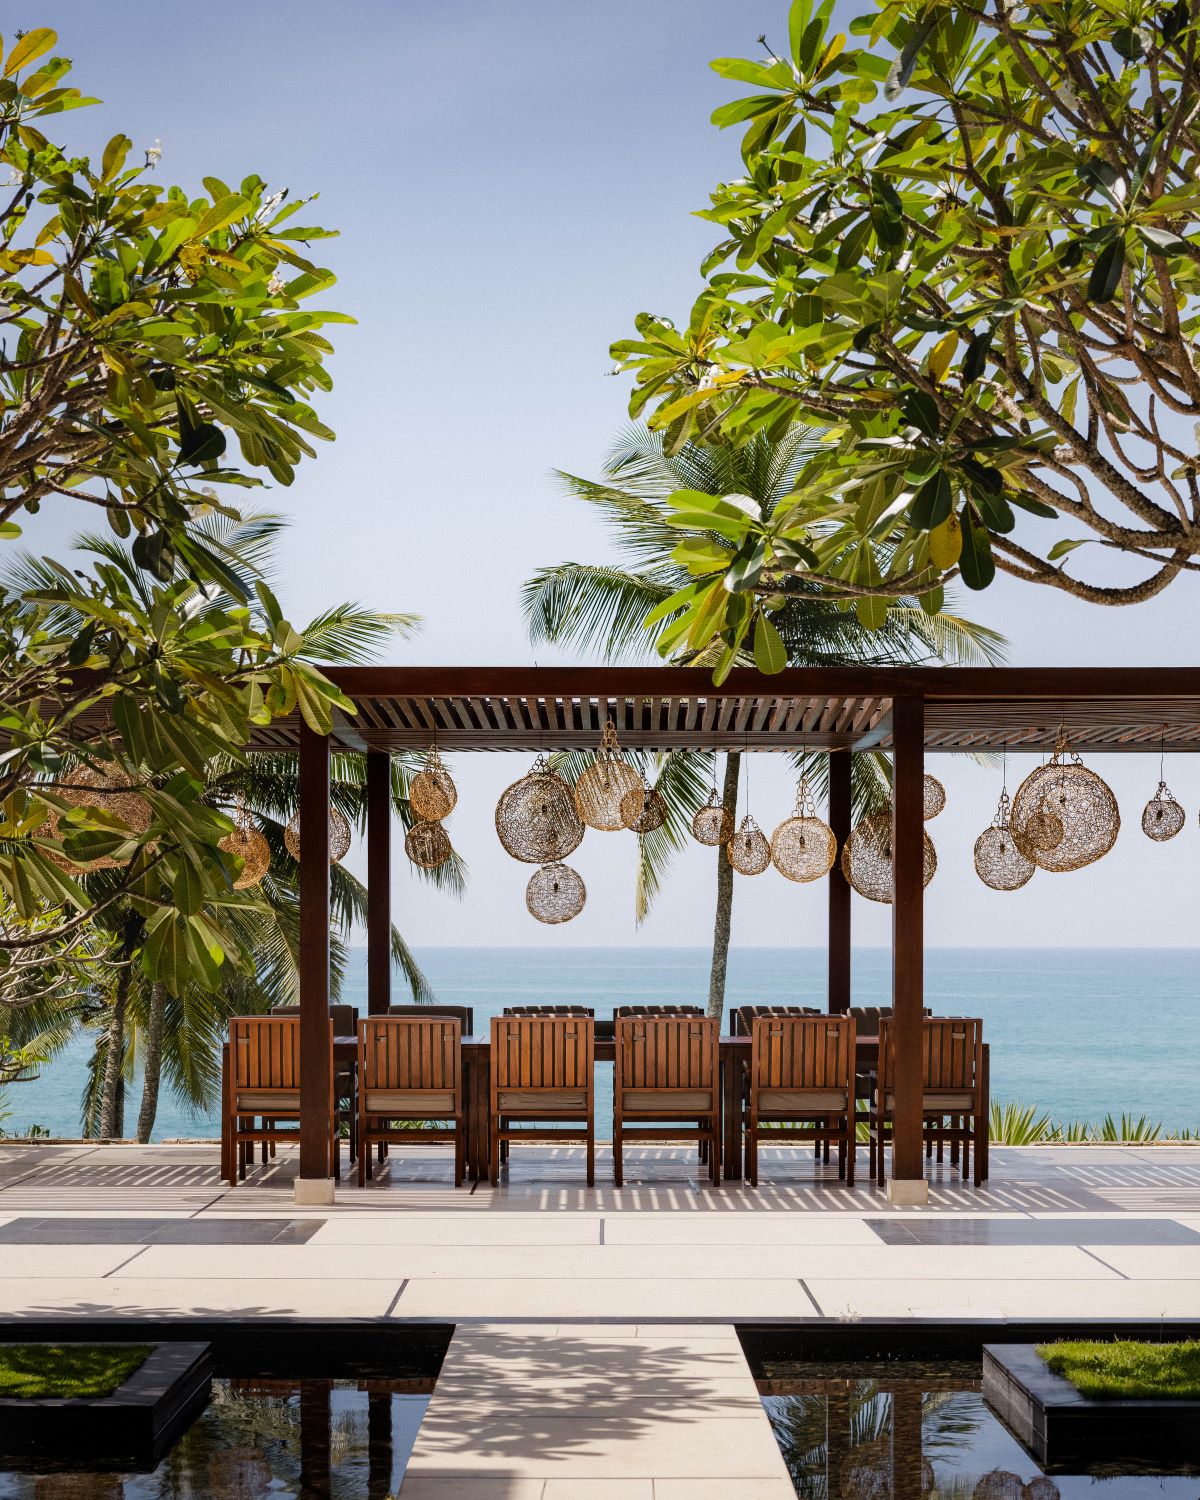 ANI Sri Lanka - Resort - Dining Pavilion - Villa Monara